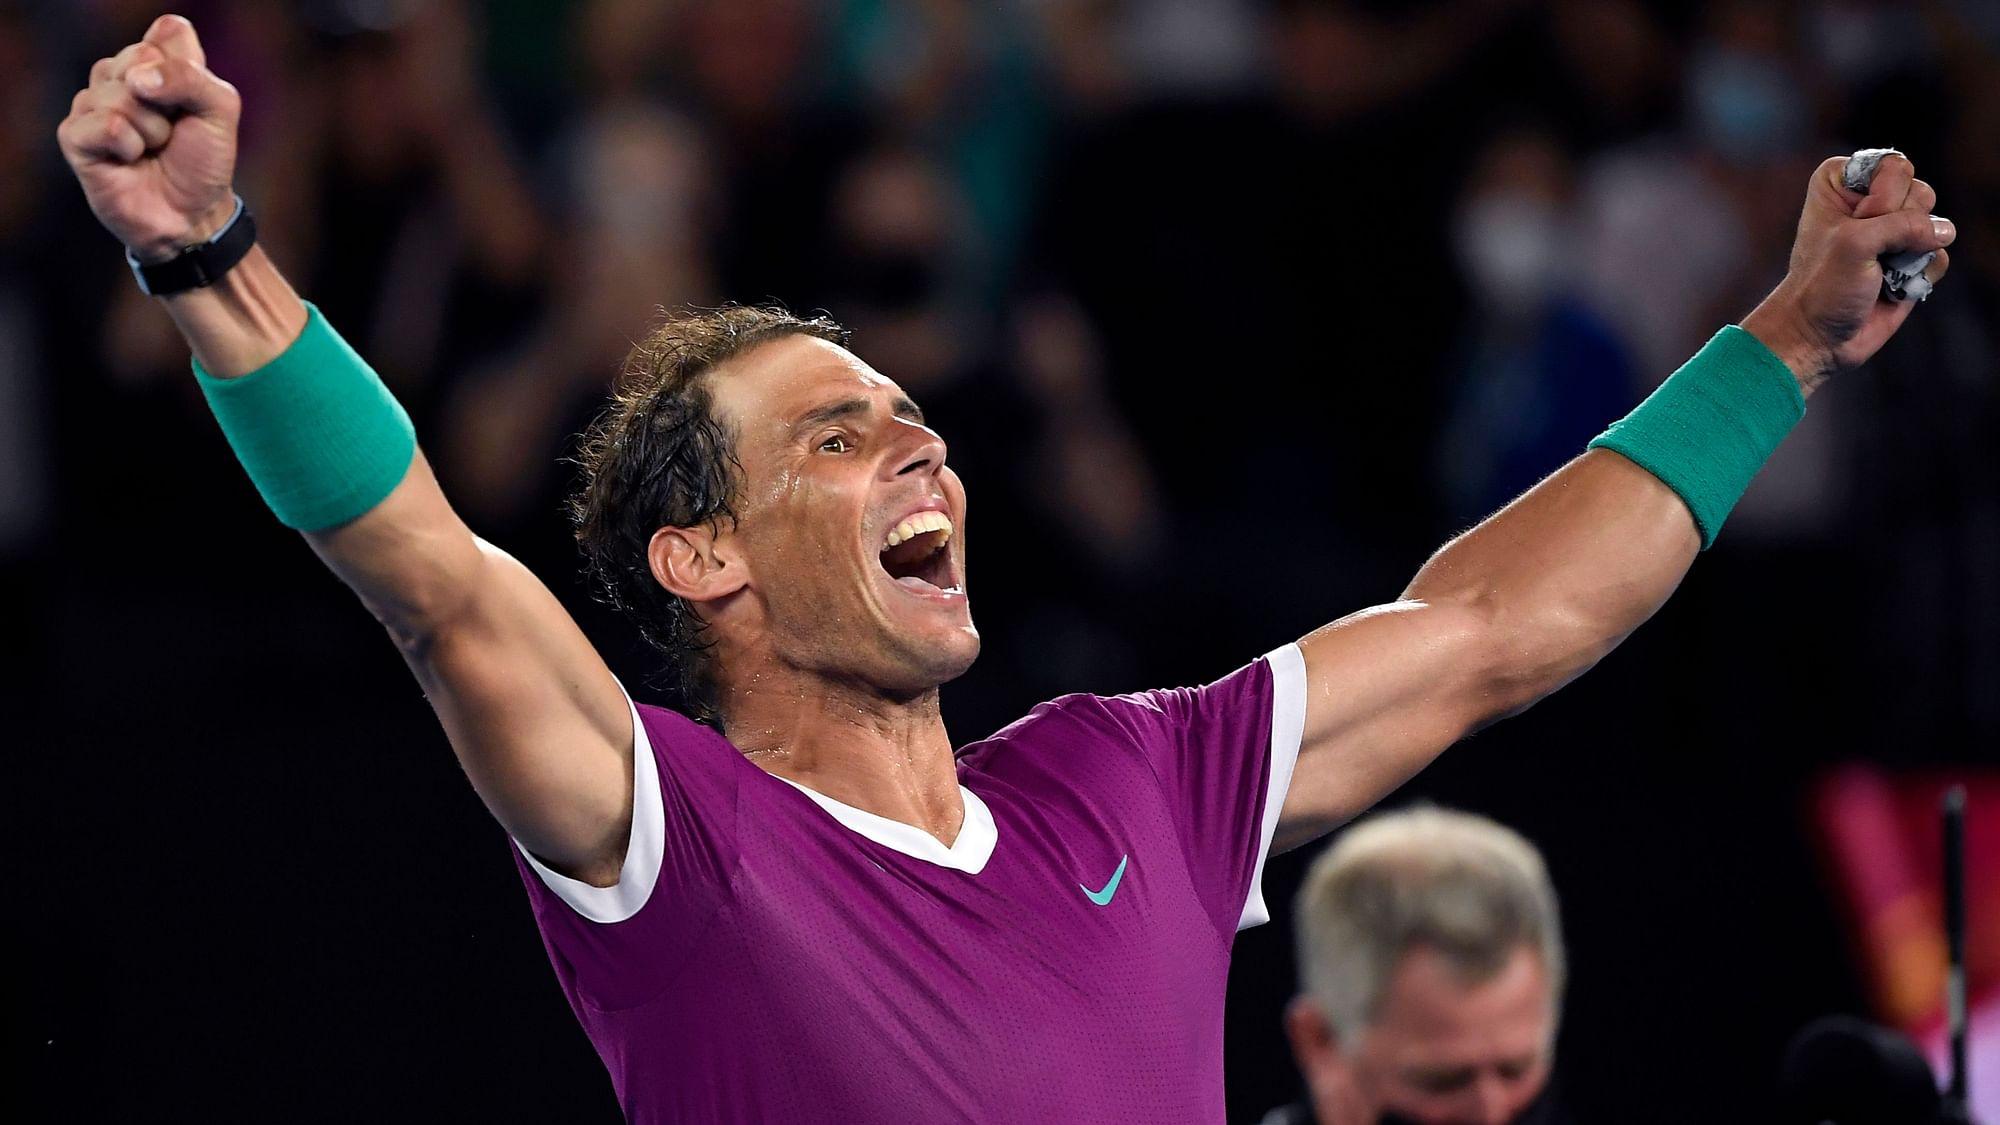 Watch Full Rafael Nadal vs Daniil Medvedev Australian Open Final Rafael Nadal Creates History By Beating Medvedev